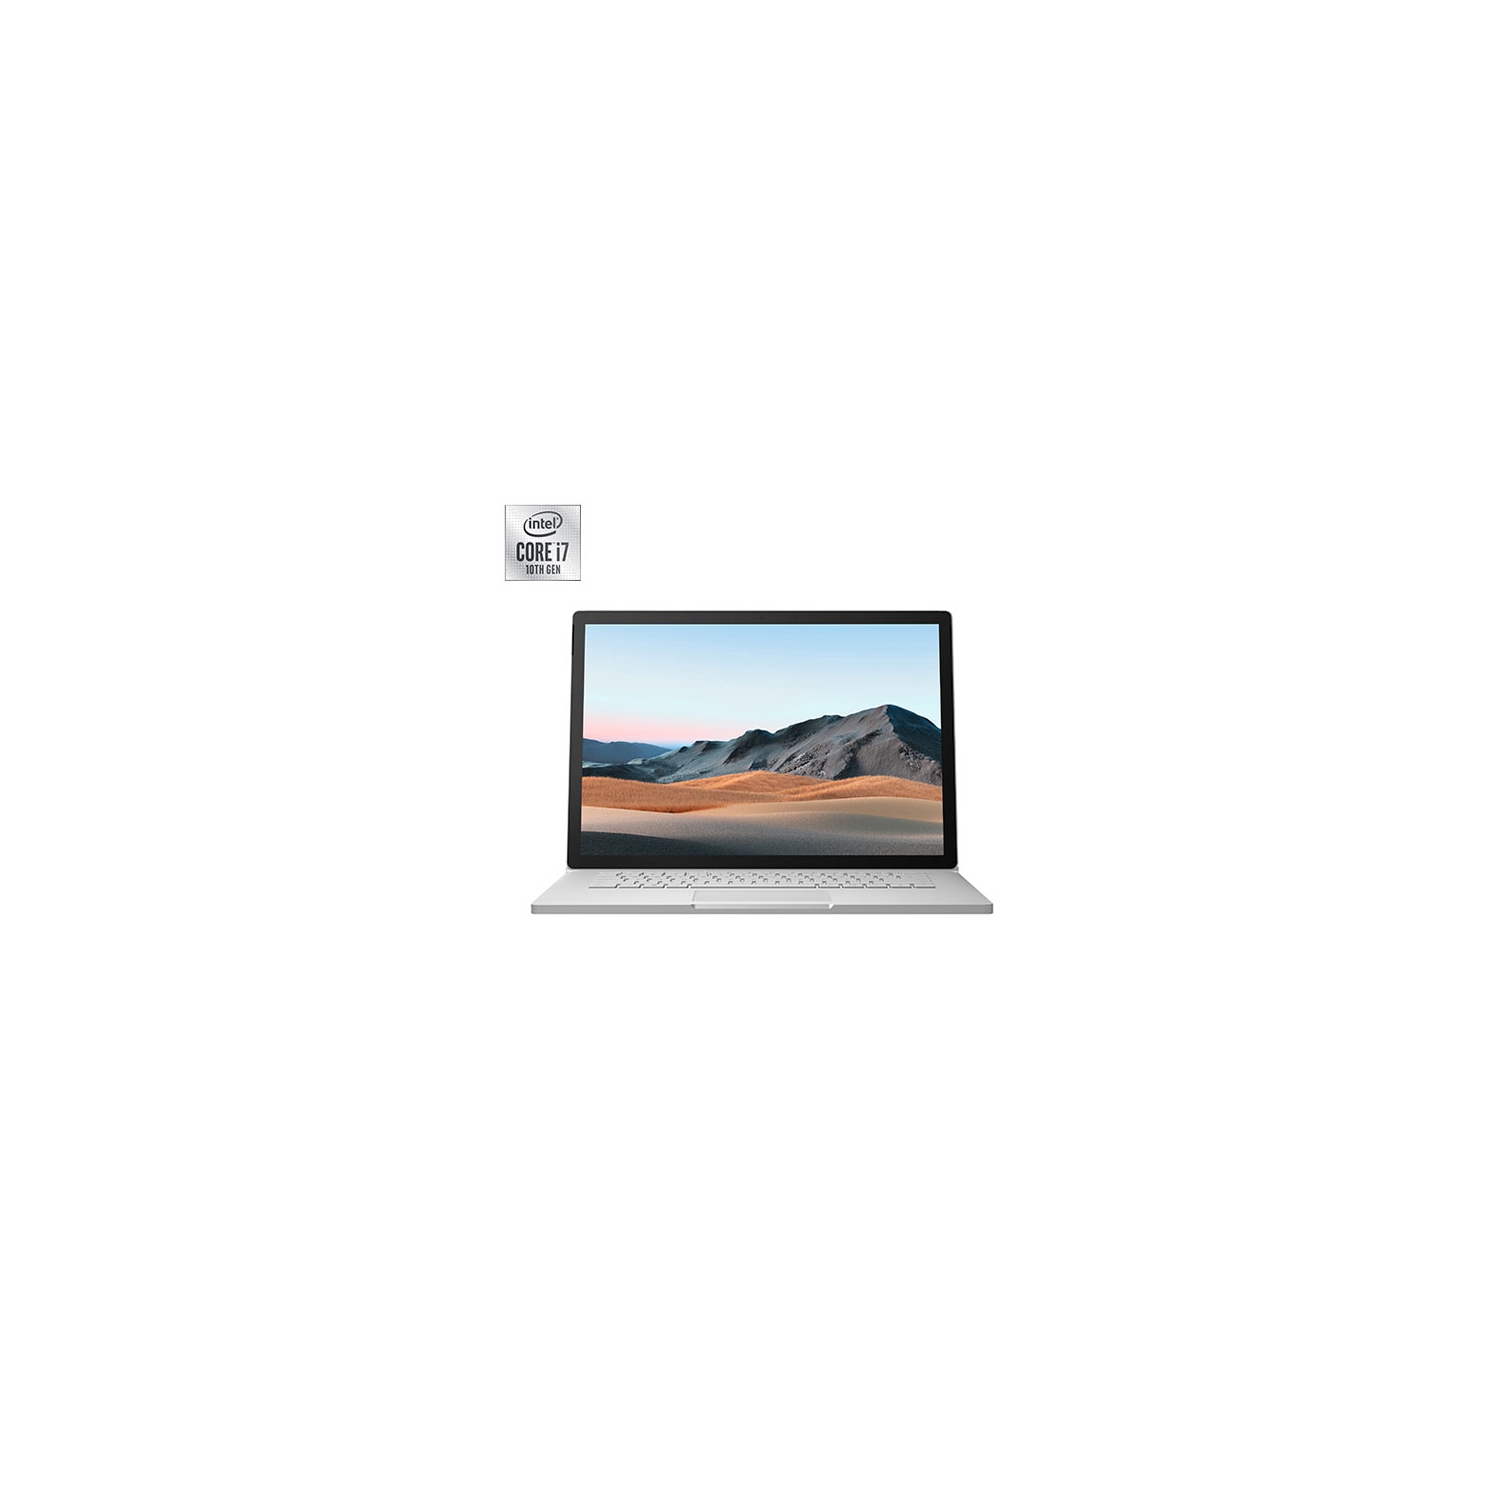 Refurbished (Good) - Microsoft Surface Book 3 15" 2-in-1 Laptop - Platinum (Intel Ci7-1065G7/256GB SSD/16GB RAM) - English